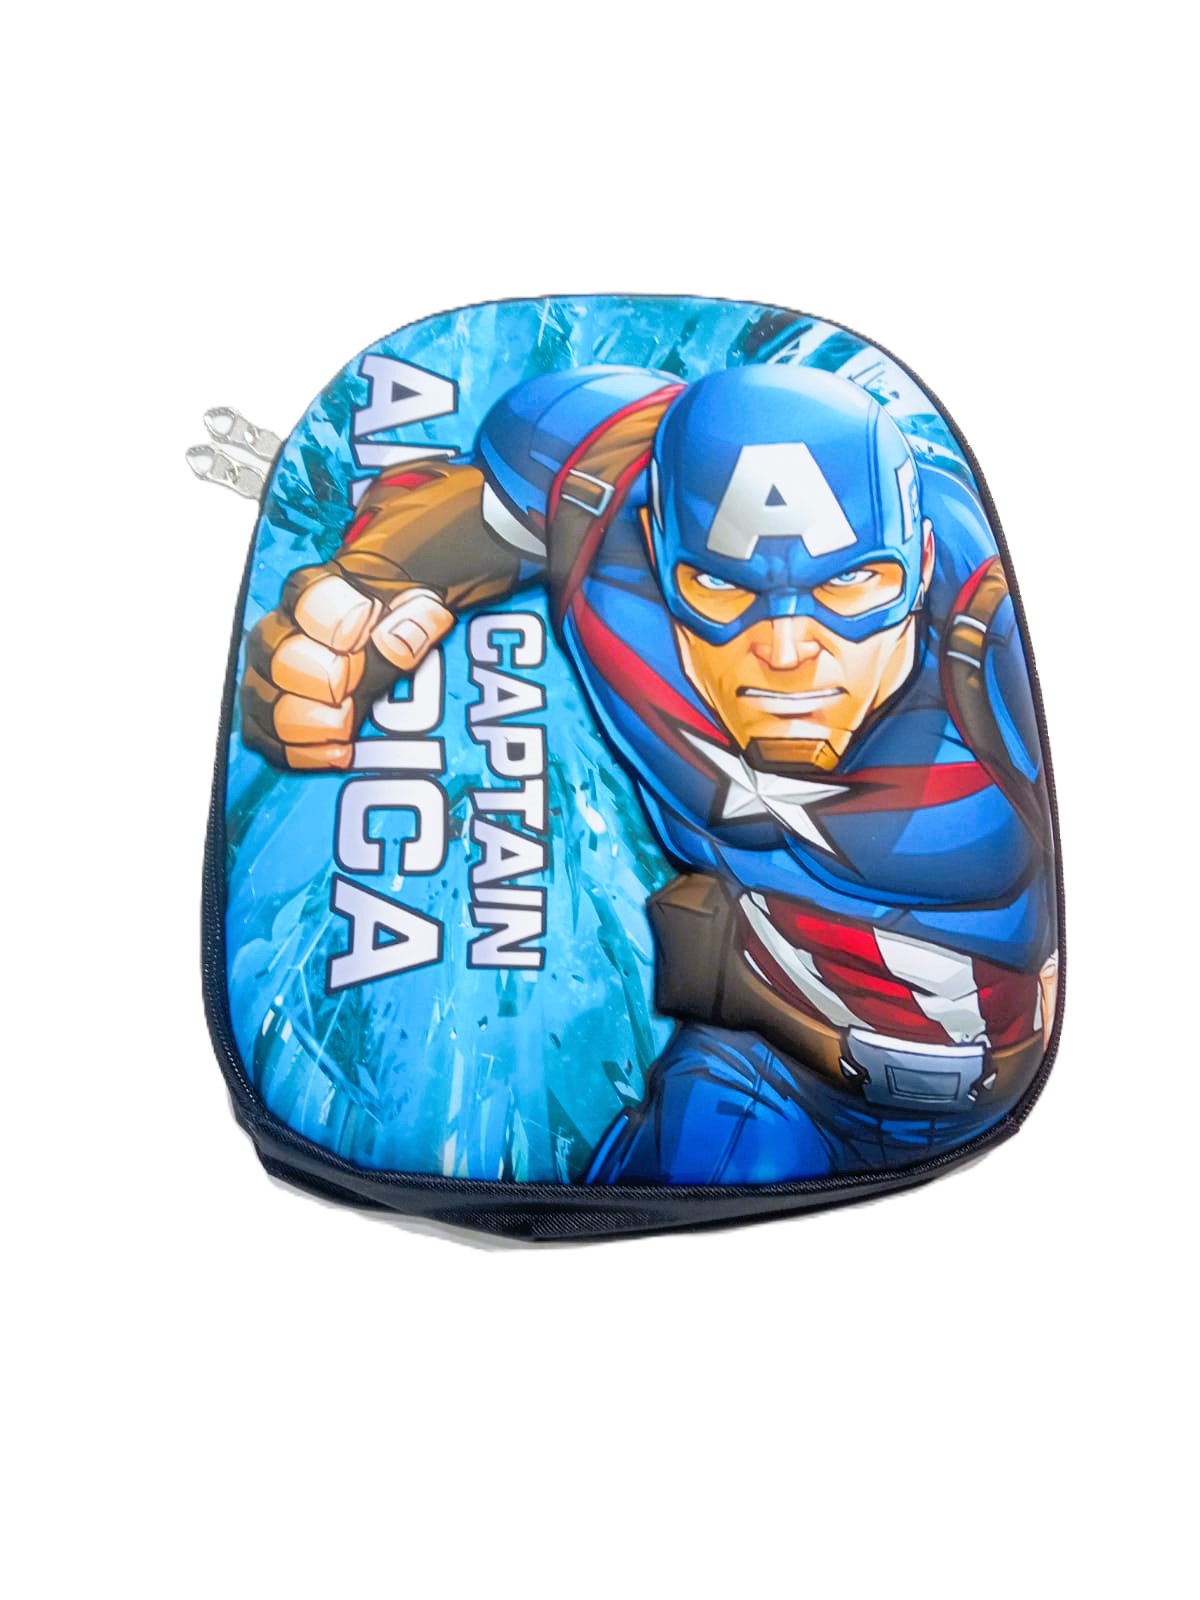 Hard-Case Mini Bag for Kids (Captain America Edition)